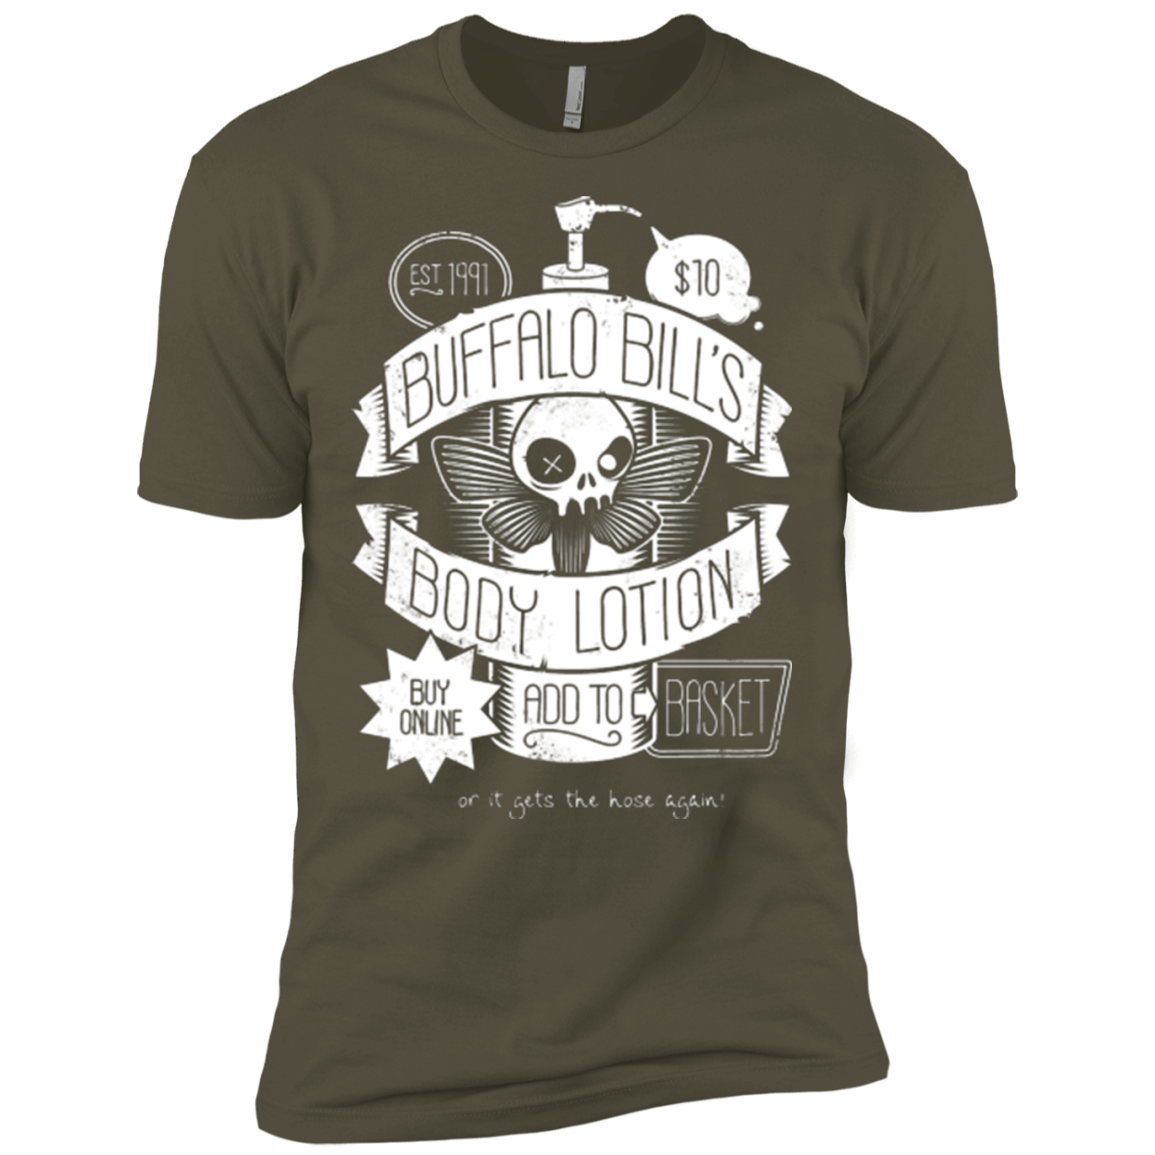 Body Lotion Men's Premium T-Shirt